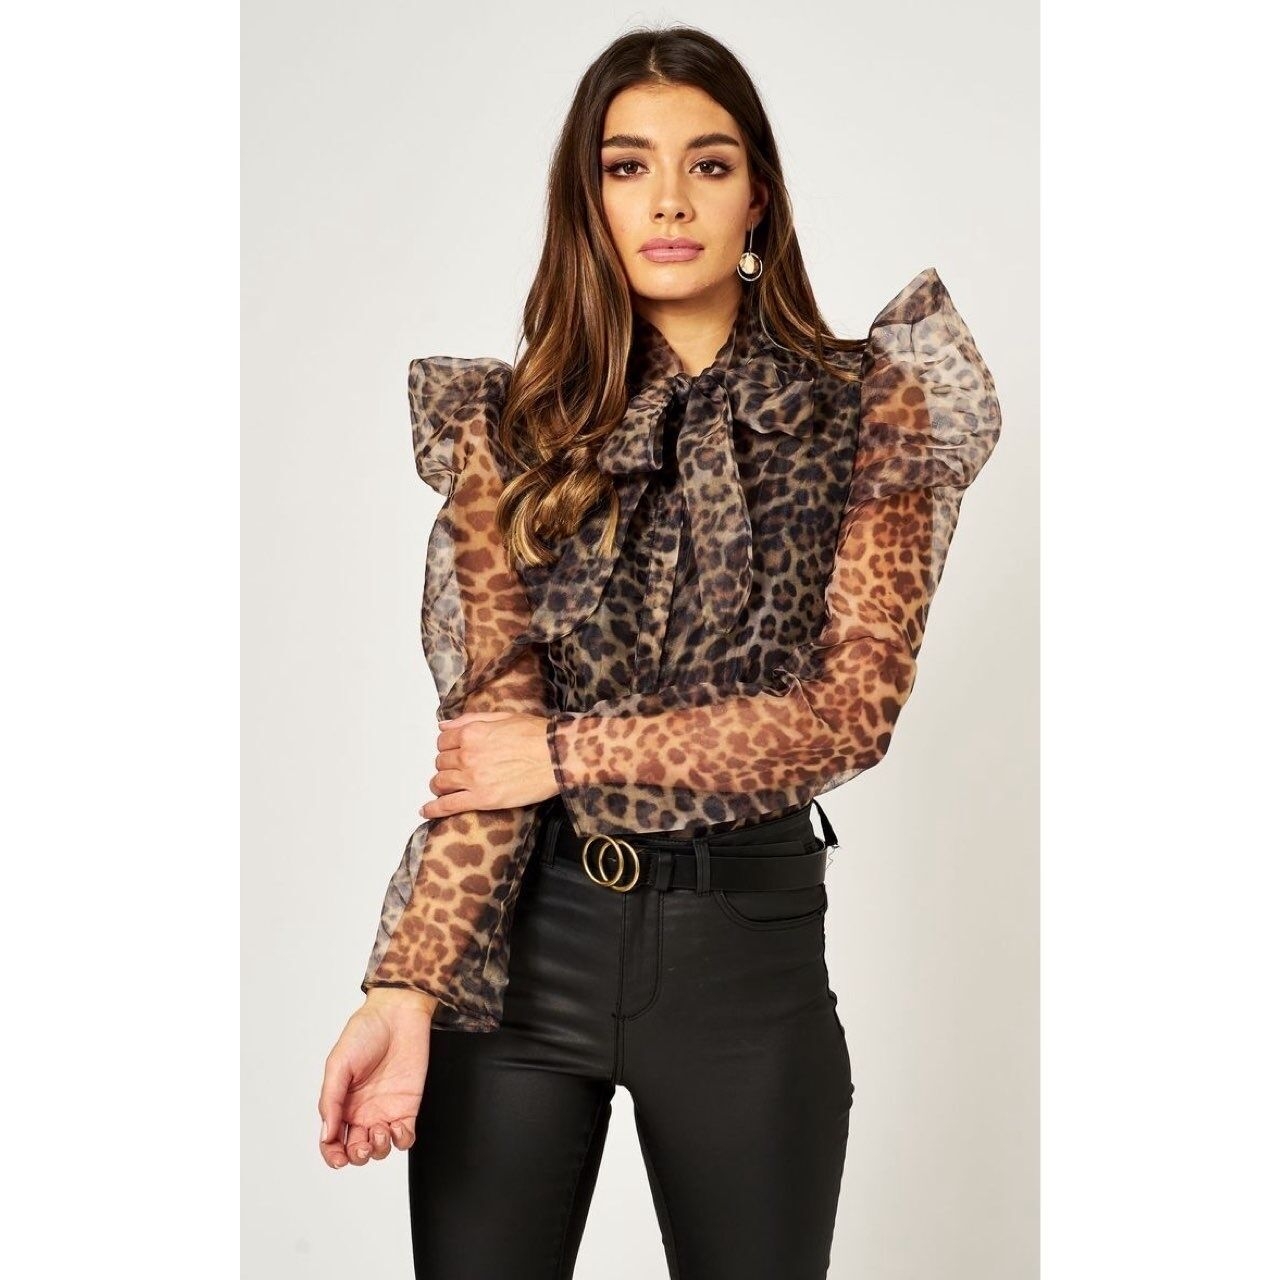 Zara Leopard Printed Blouse